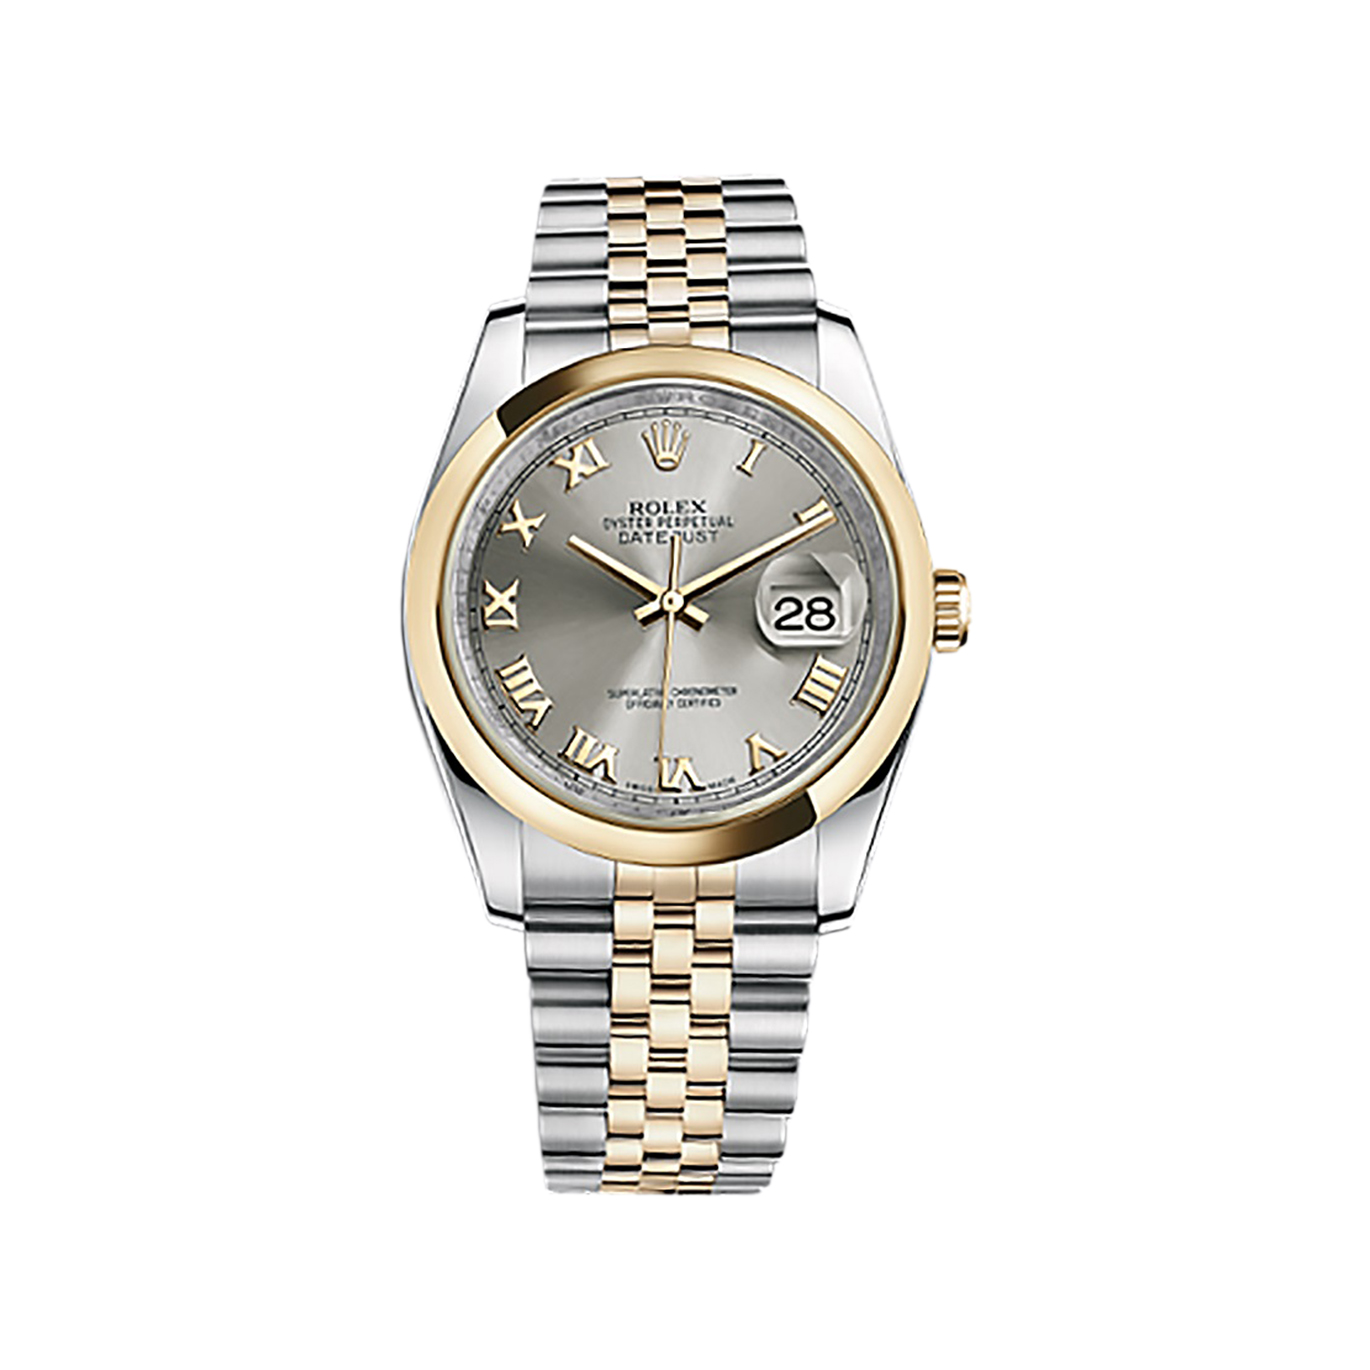 Datejust 36 116203 Gold & Stainless Steel Watch (Steel)